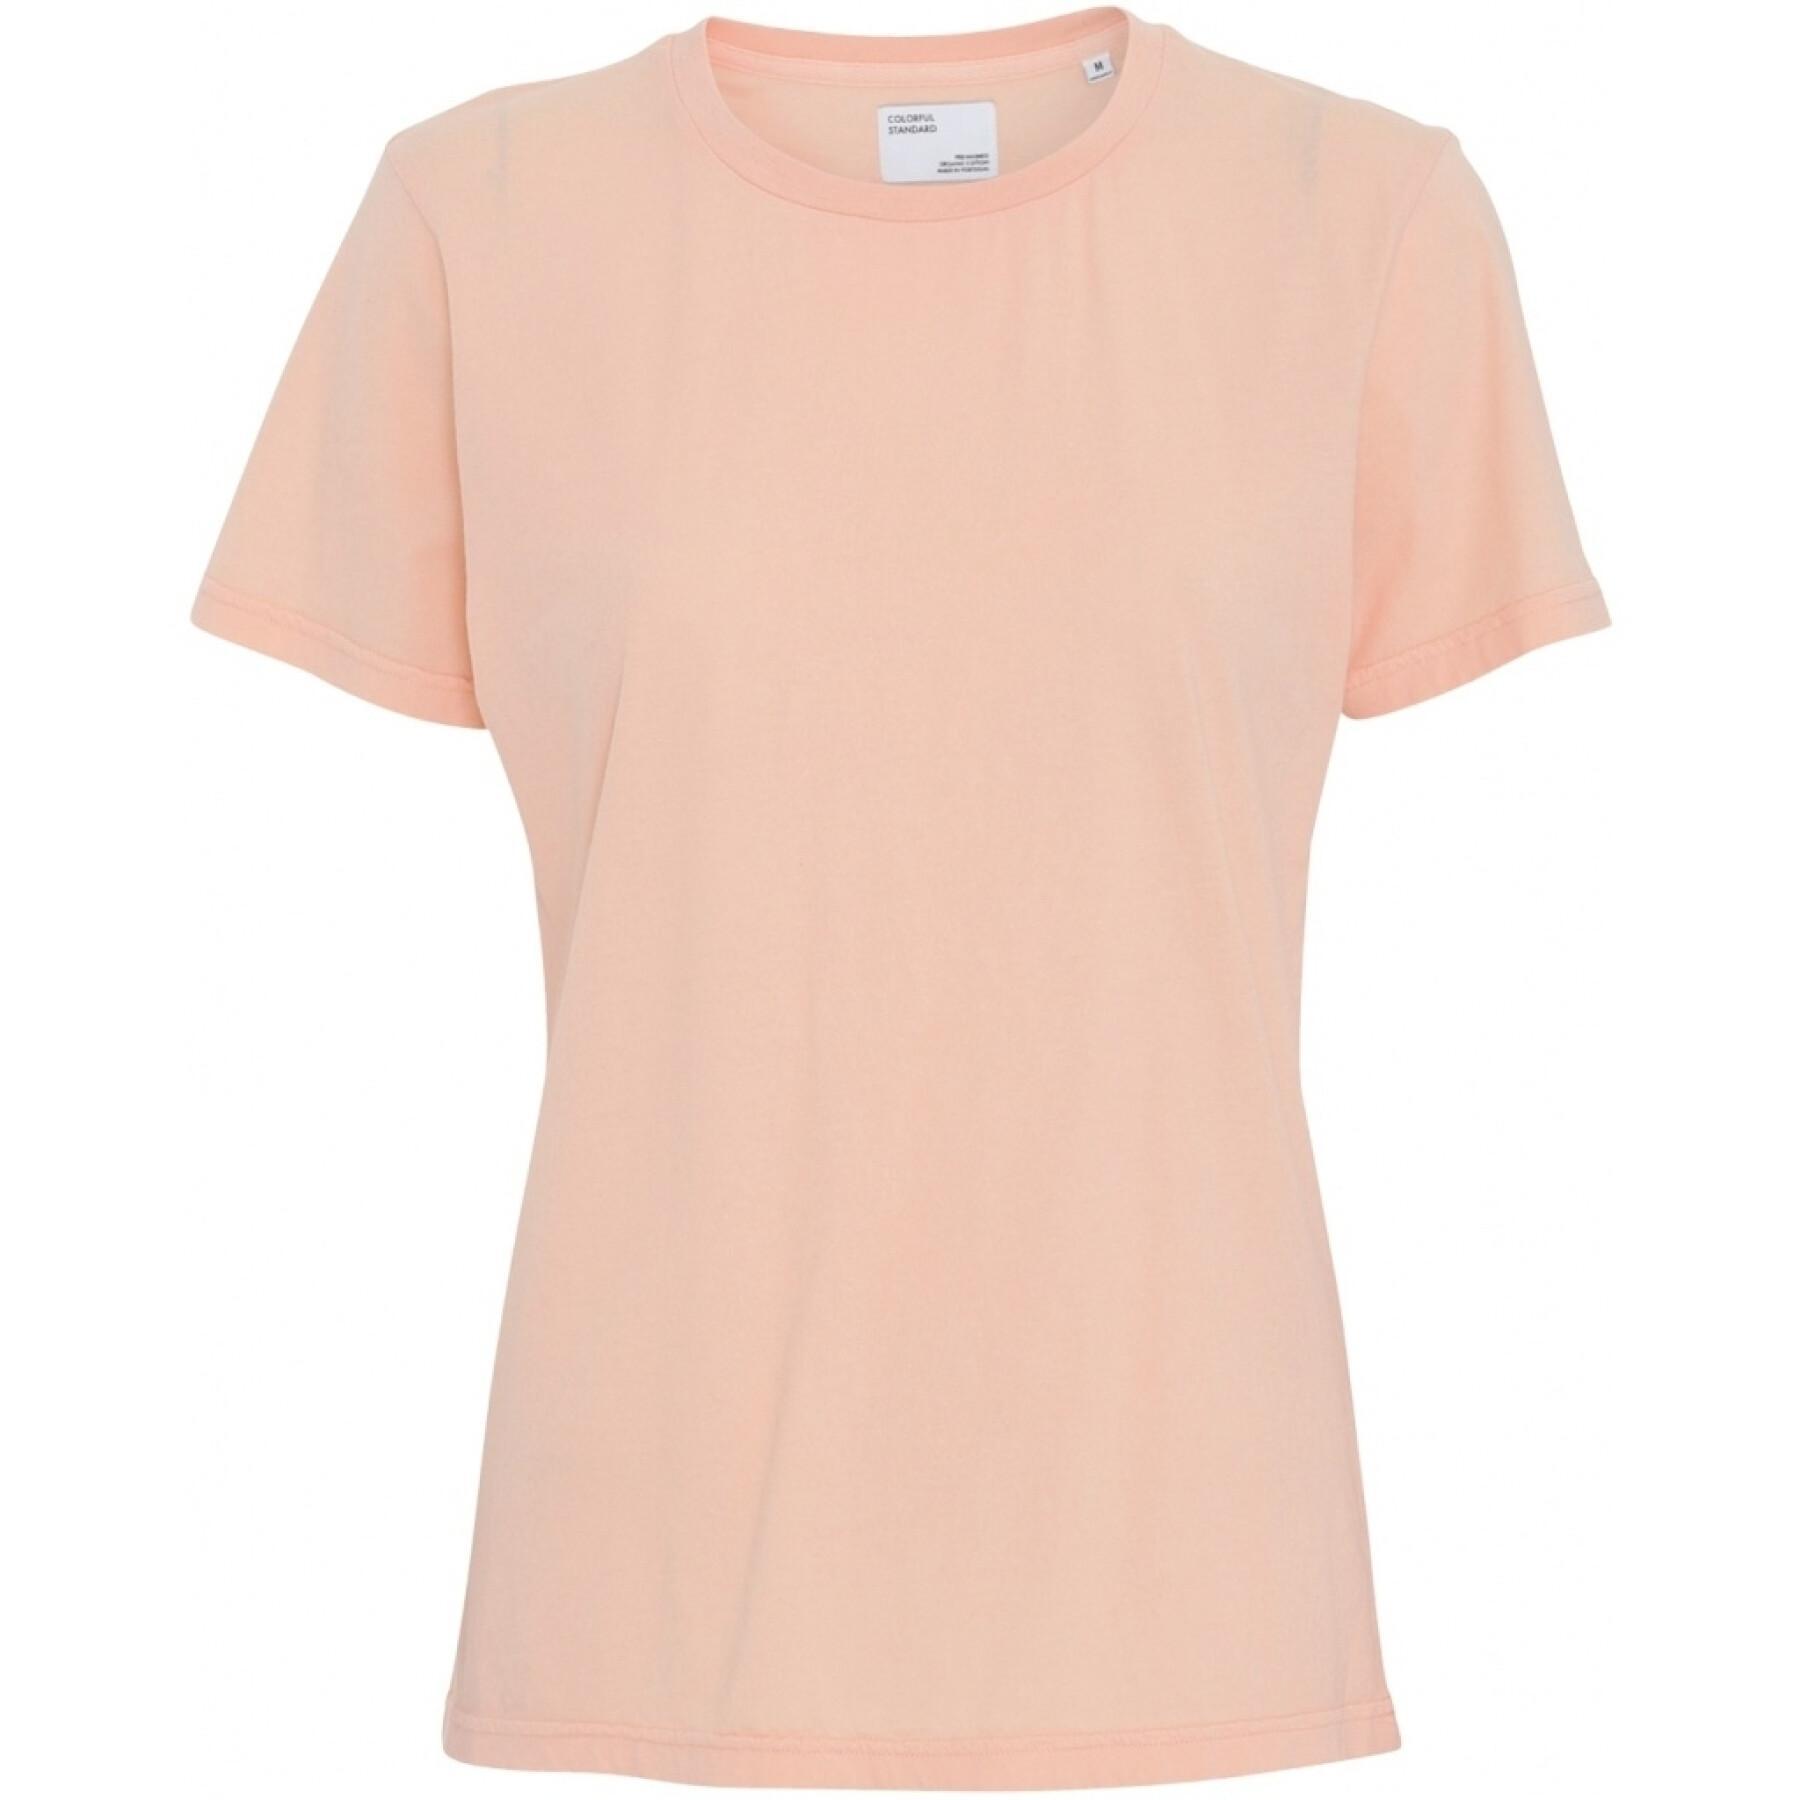 Women's T-shirt Colorful Standard Light Organic paradise peach